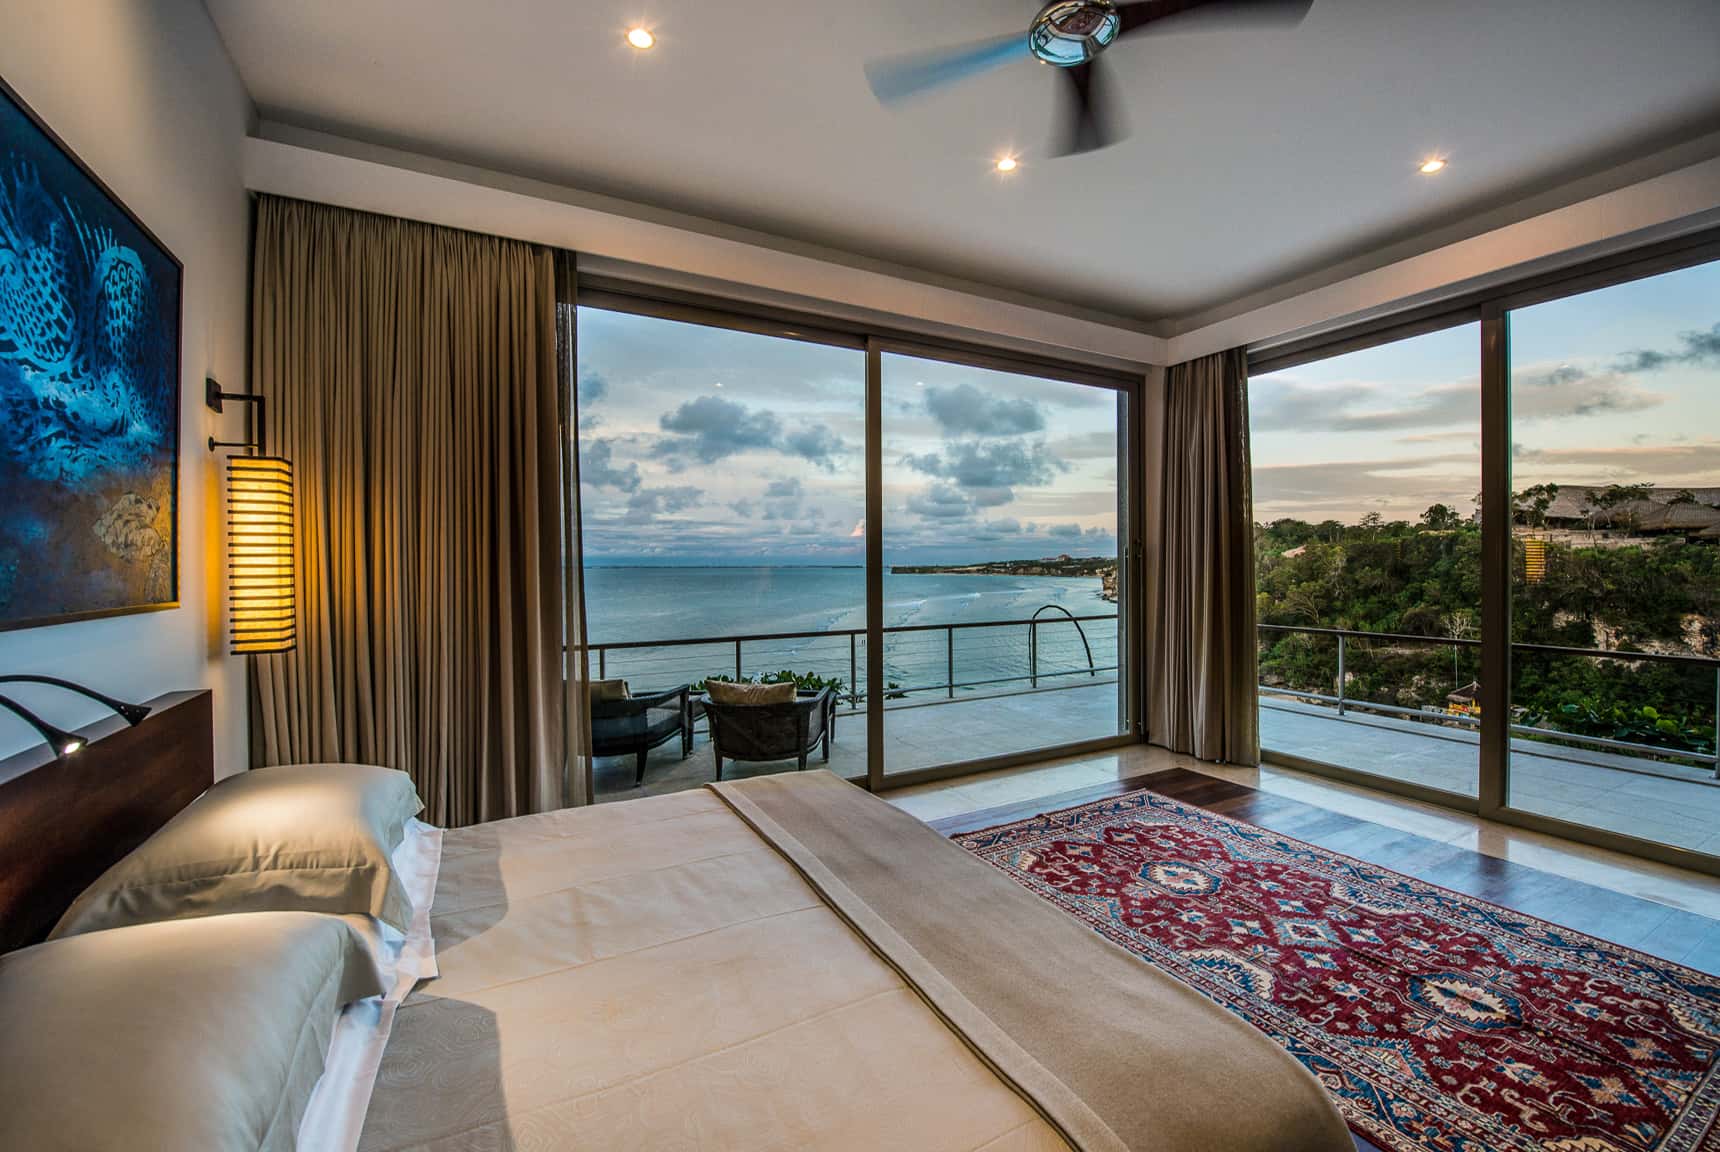 Editing digital photography of luxury hotels, resorts and villas by LuxViz: Villa Laut Bali - interior bedroom with exterior ocean views